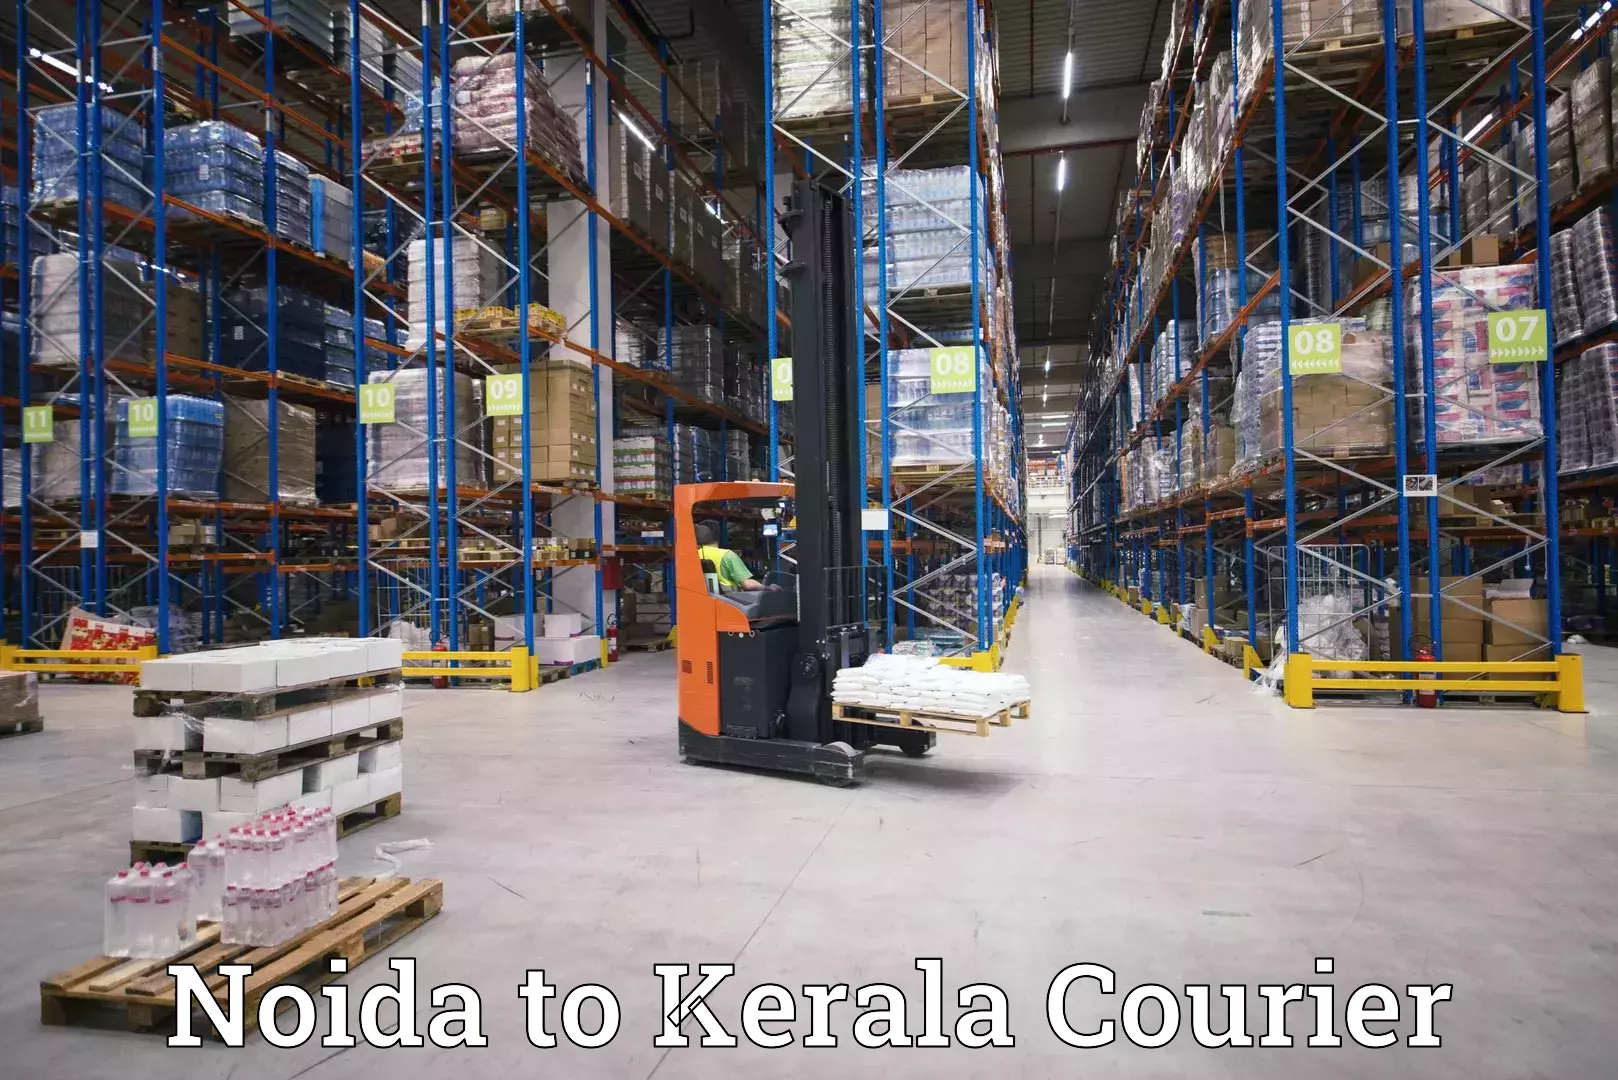 Comprehensive shipping network Noida to Kattappana